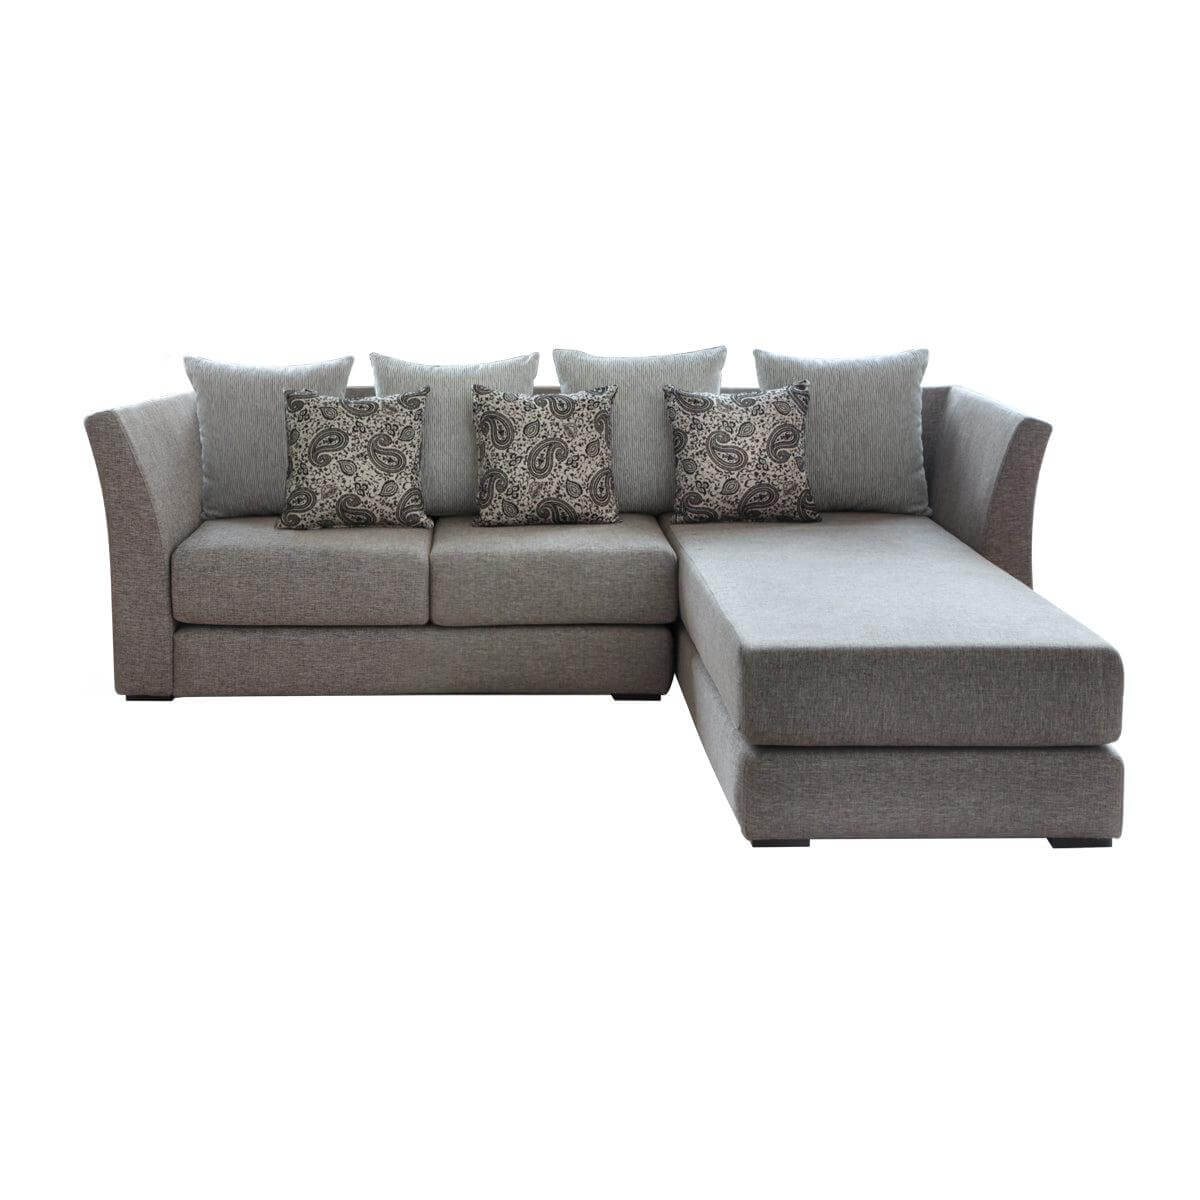 nara l-shape two seat elegant and simple sofa